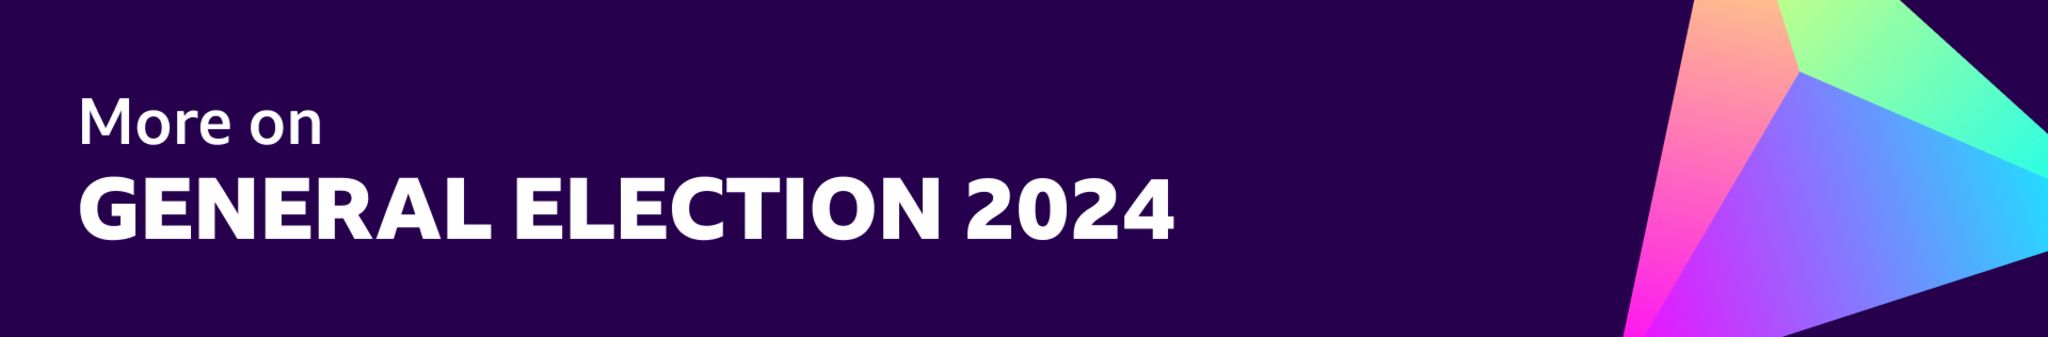 election 2024 banner